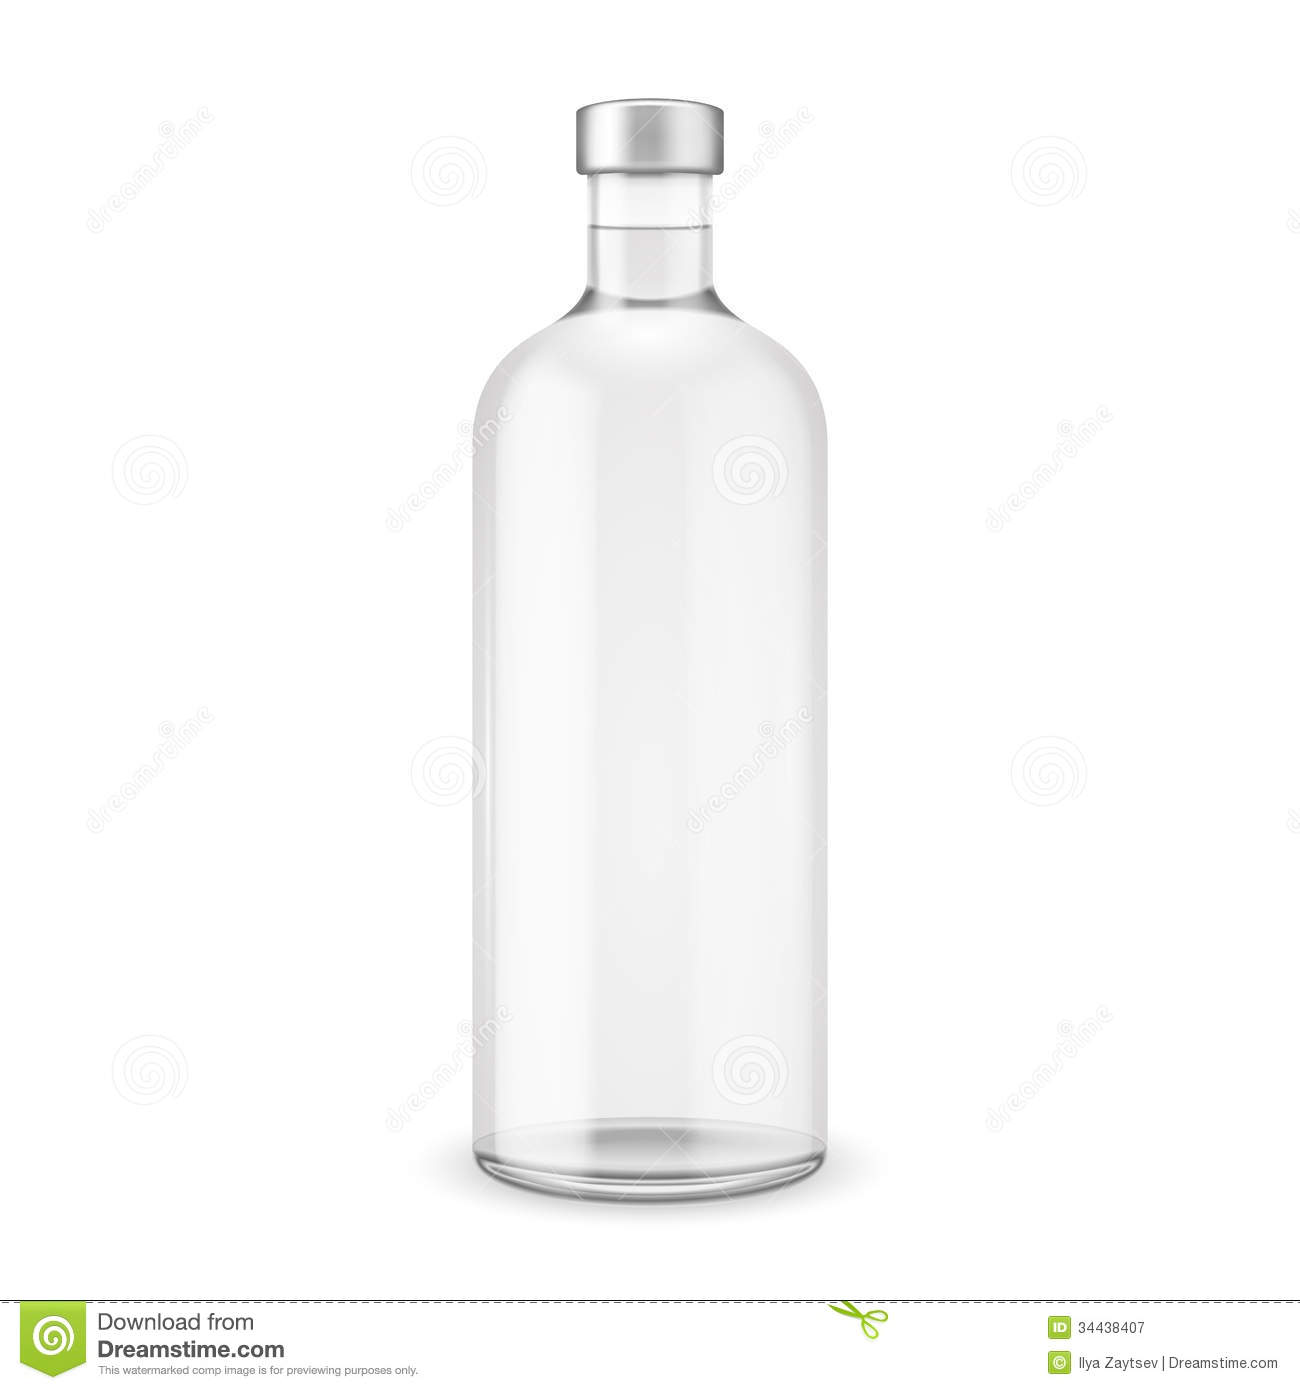 Glass Vodka Bottle With Silver Cap  Vector Illustration  Glass Bottle